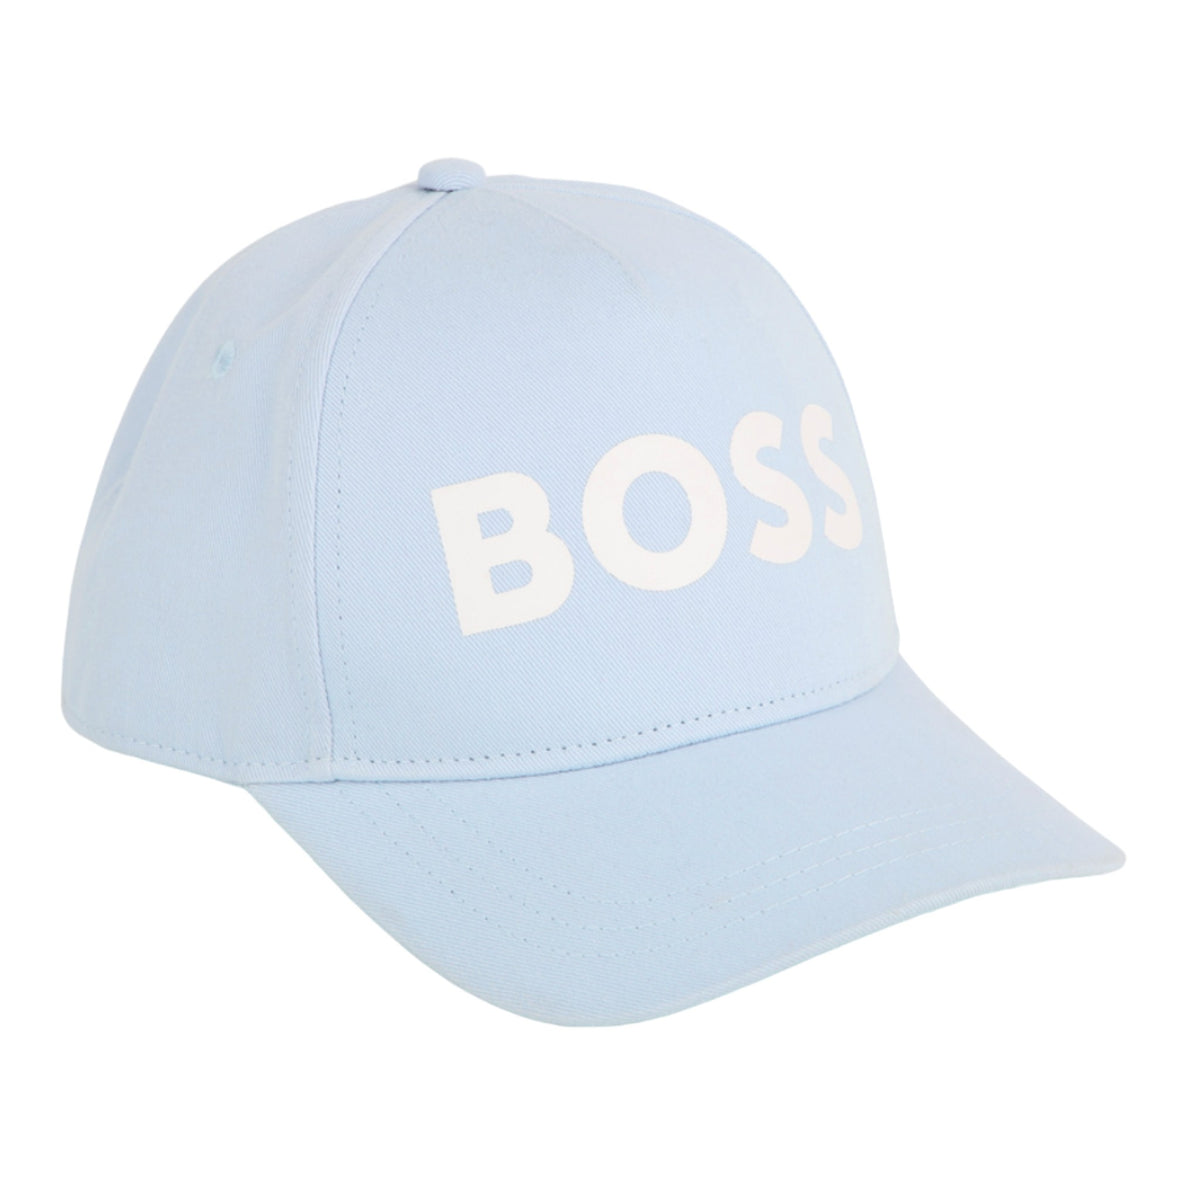 Hugo Boss Kids Cotton Adjustable Baseball Cap